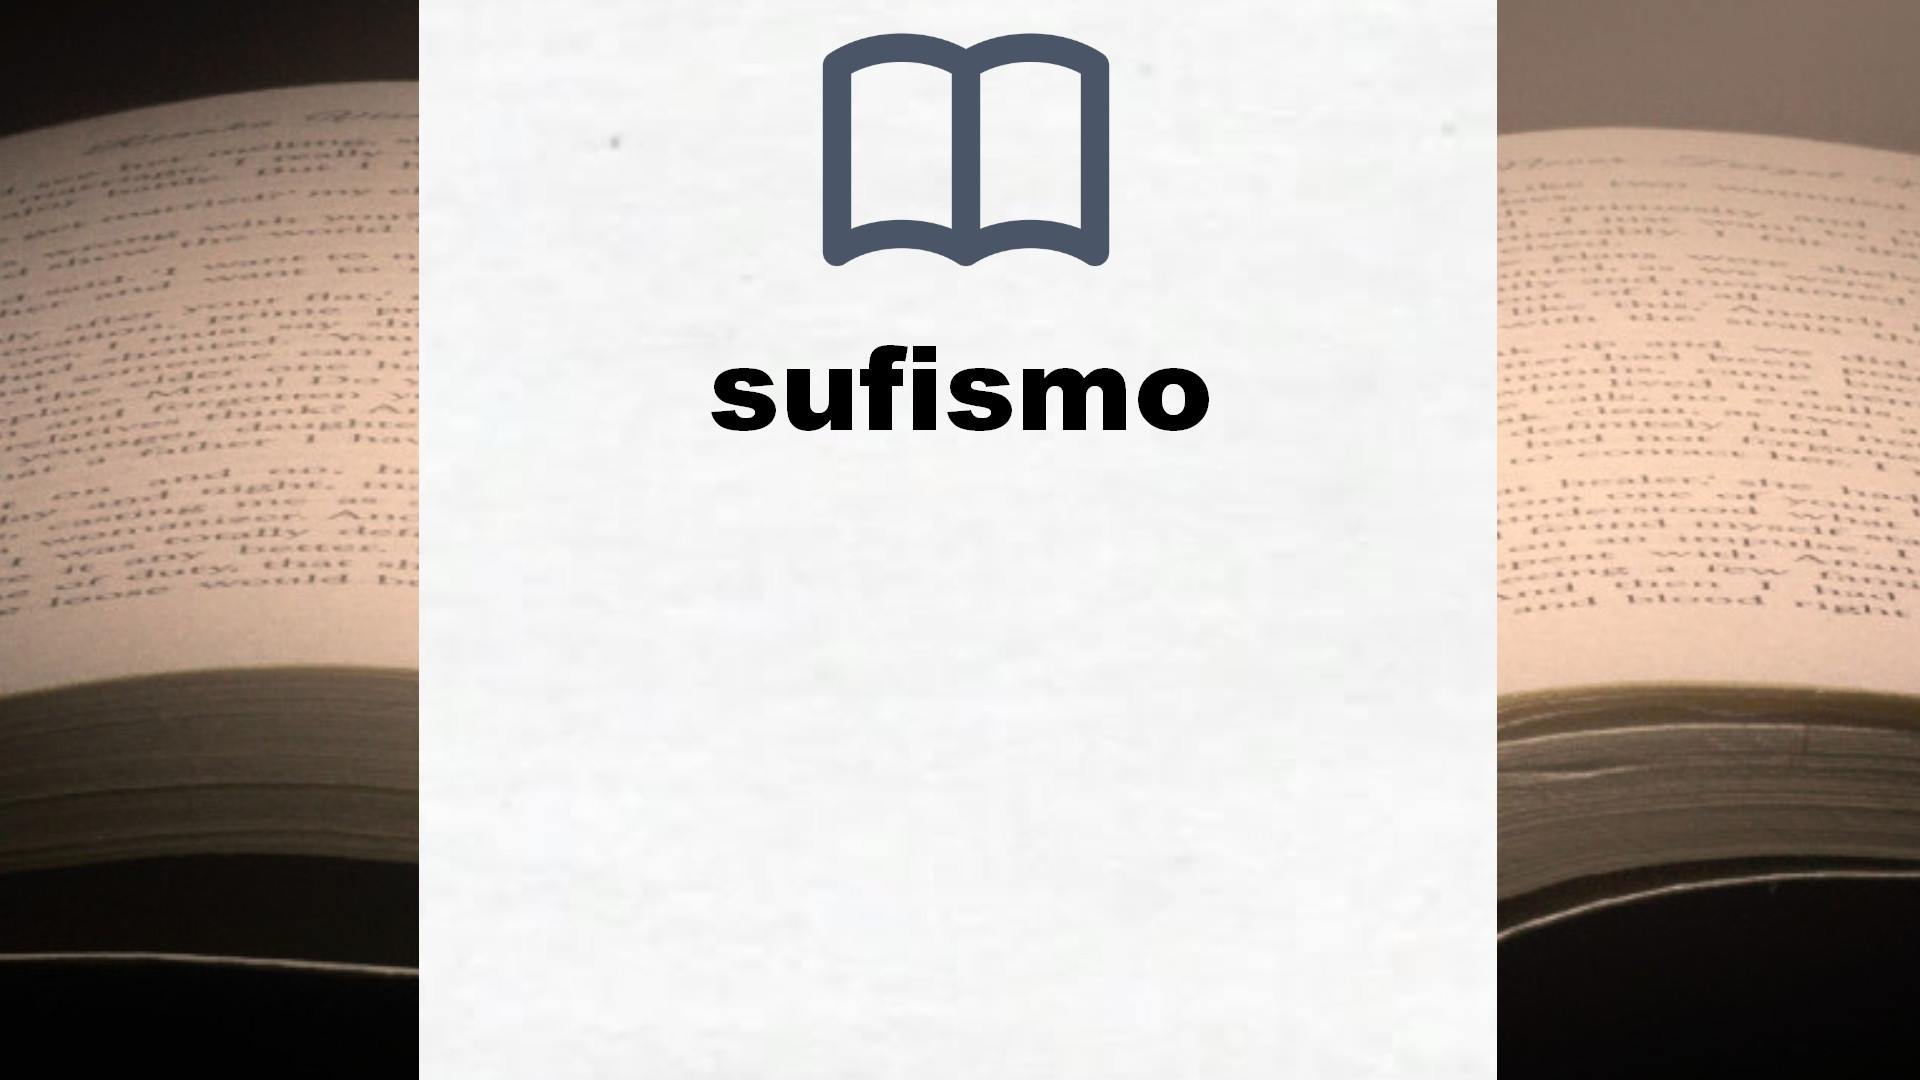 Libros sobre sufismo